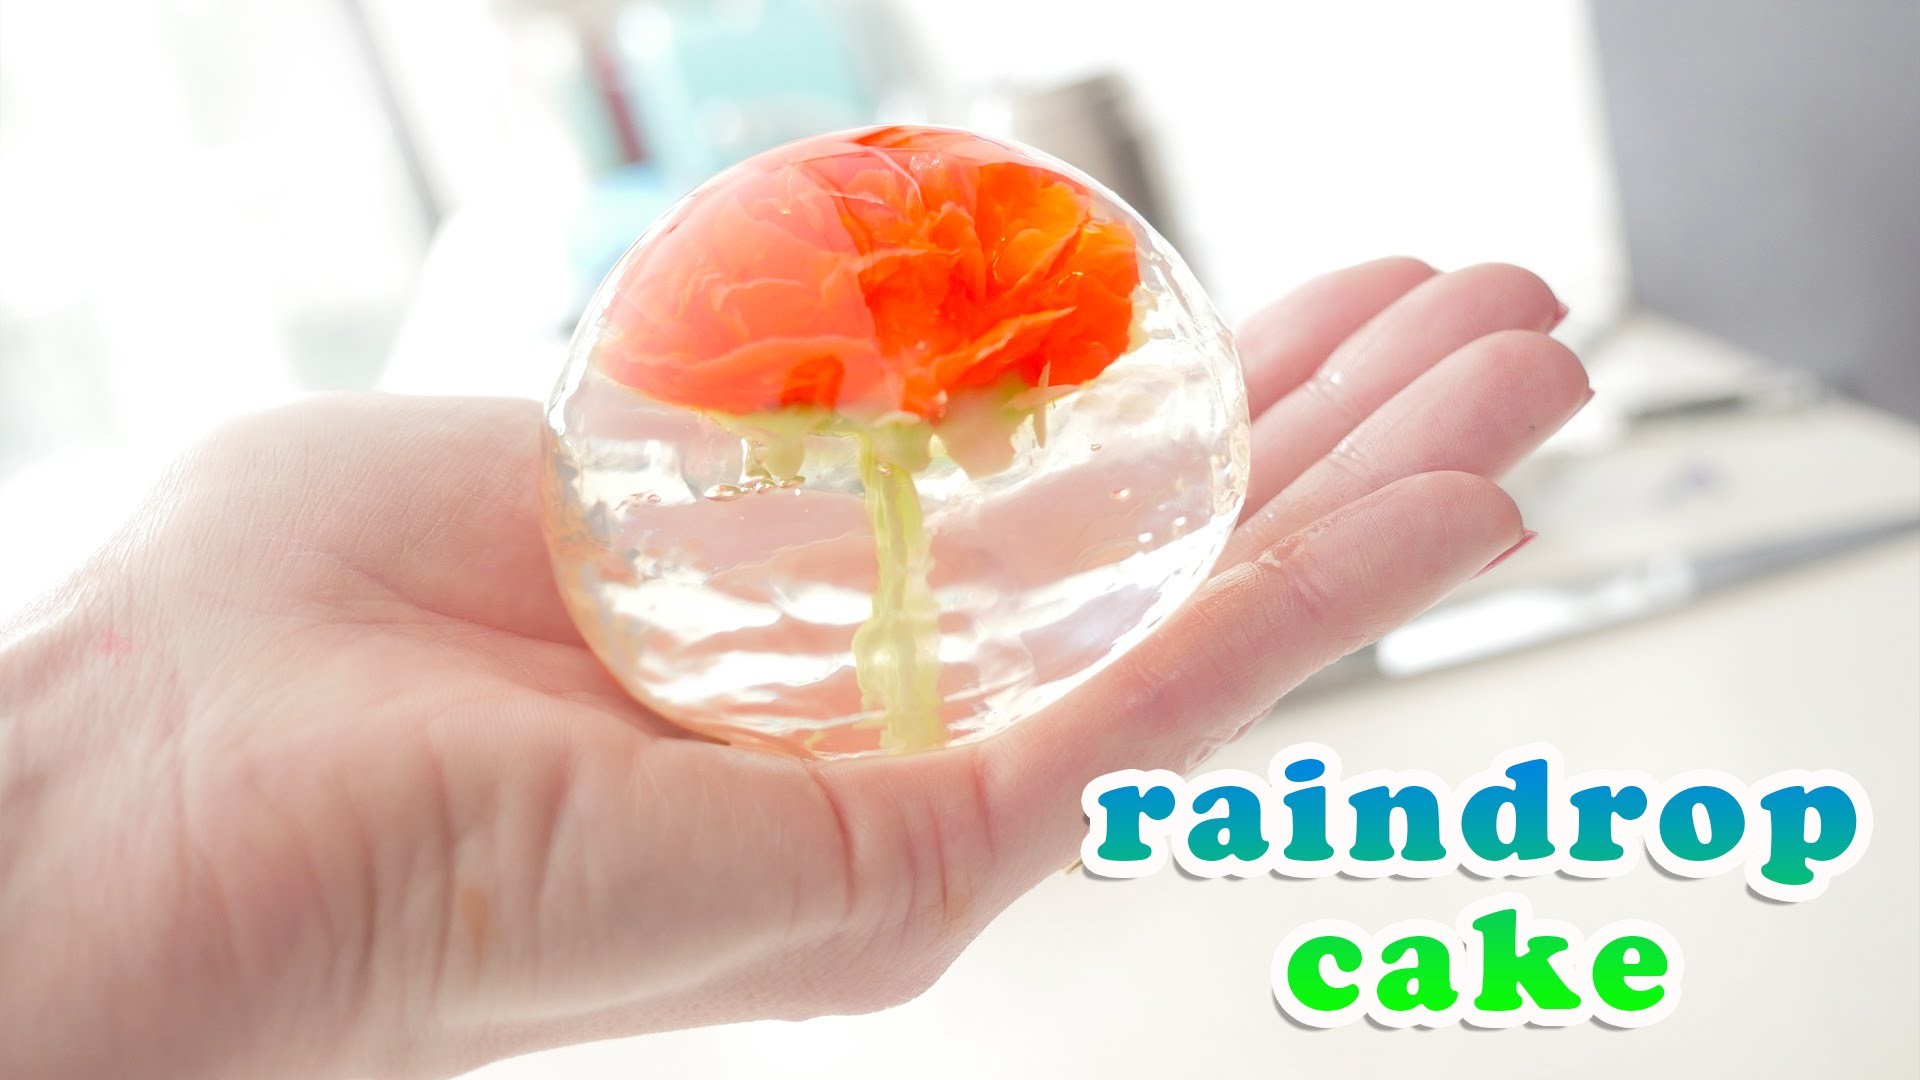 raindrop cake ingredients